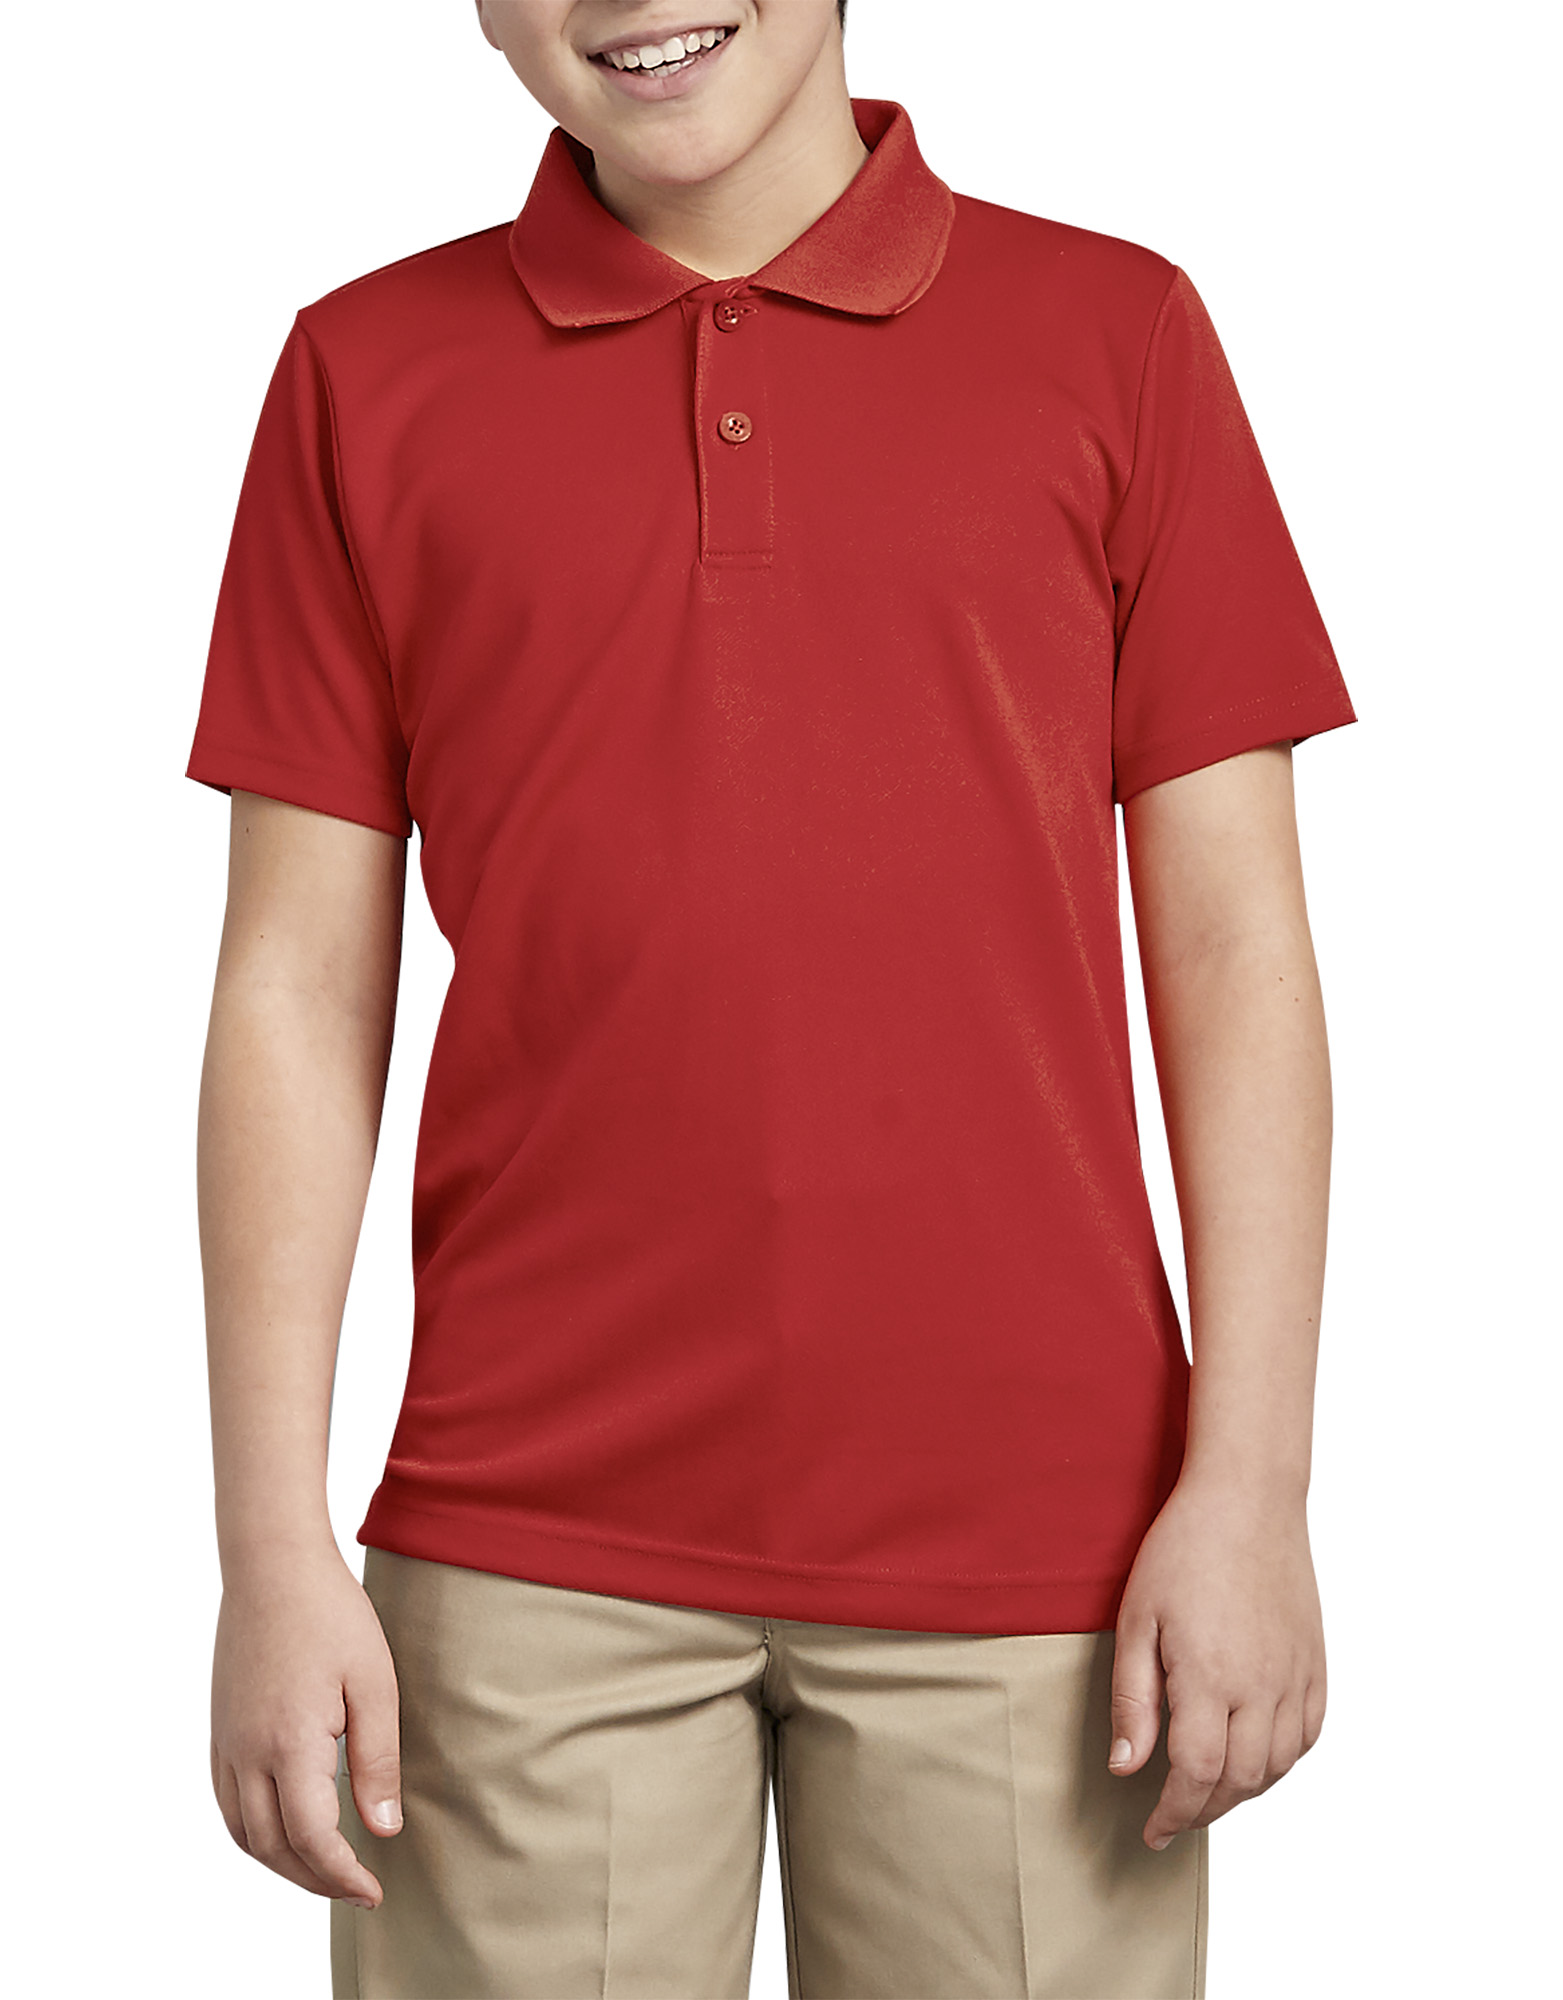 Dickies polo Shirts Boys long sleeve PIQUE Top Kids School Uniforms Collar Shirt